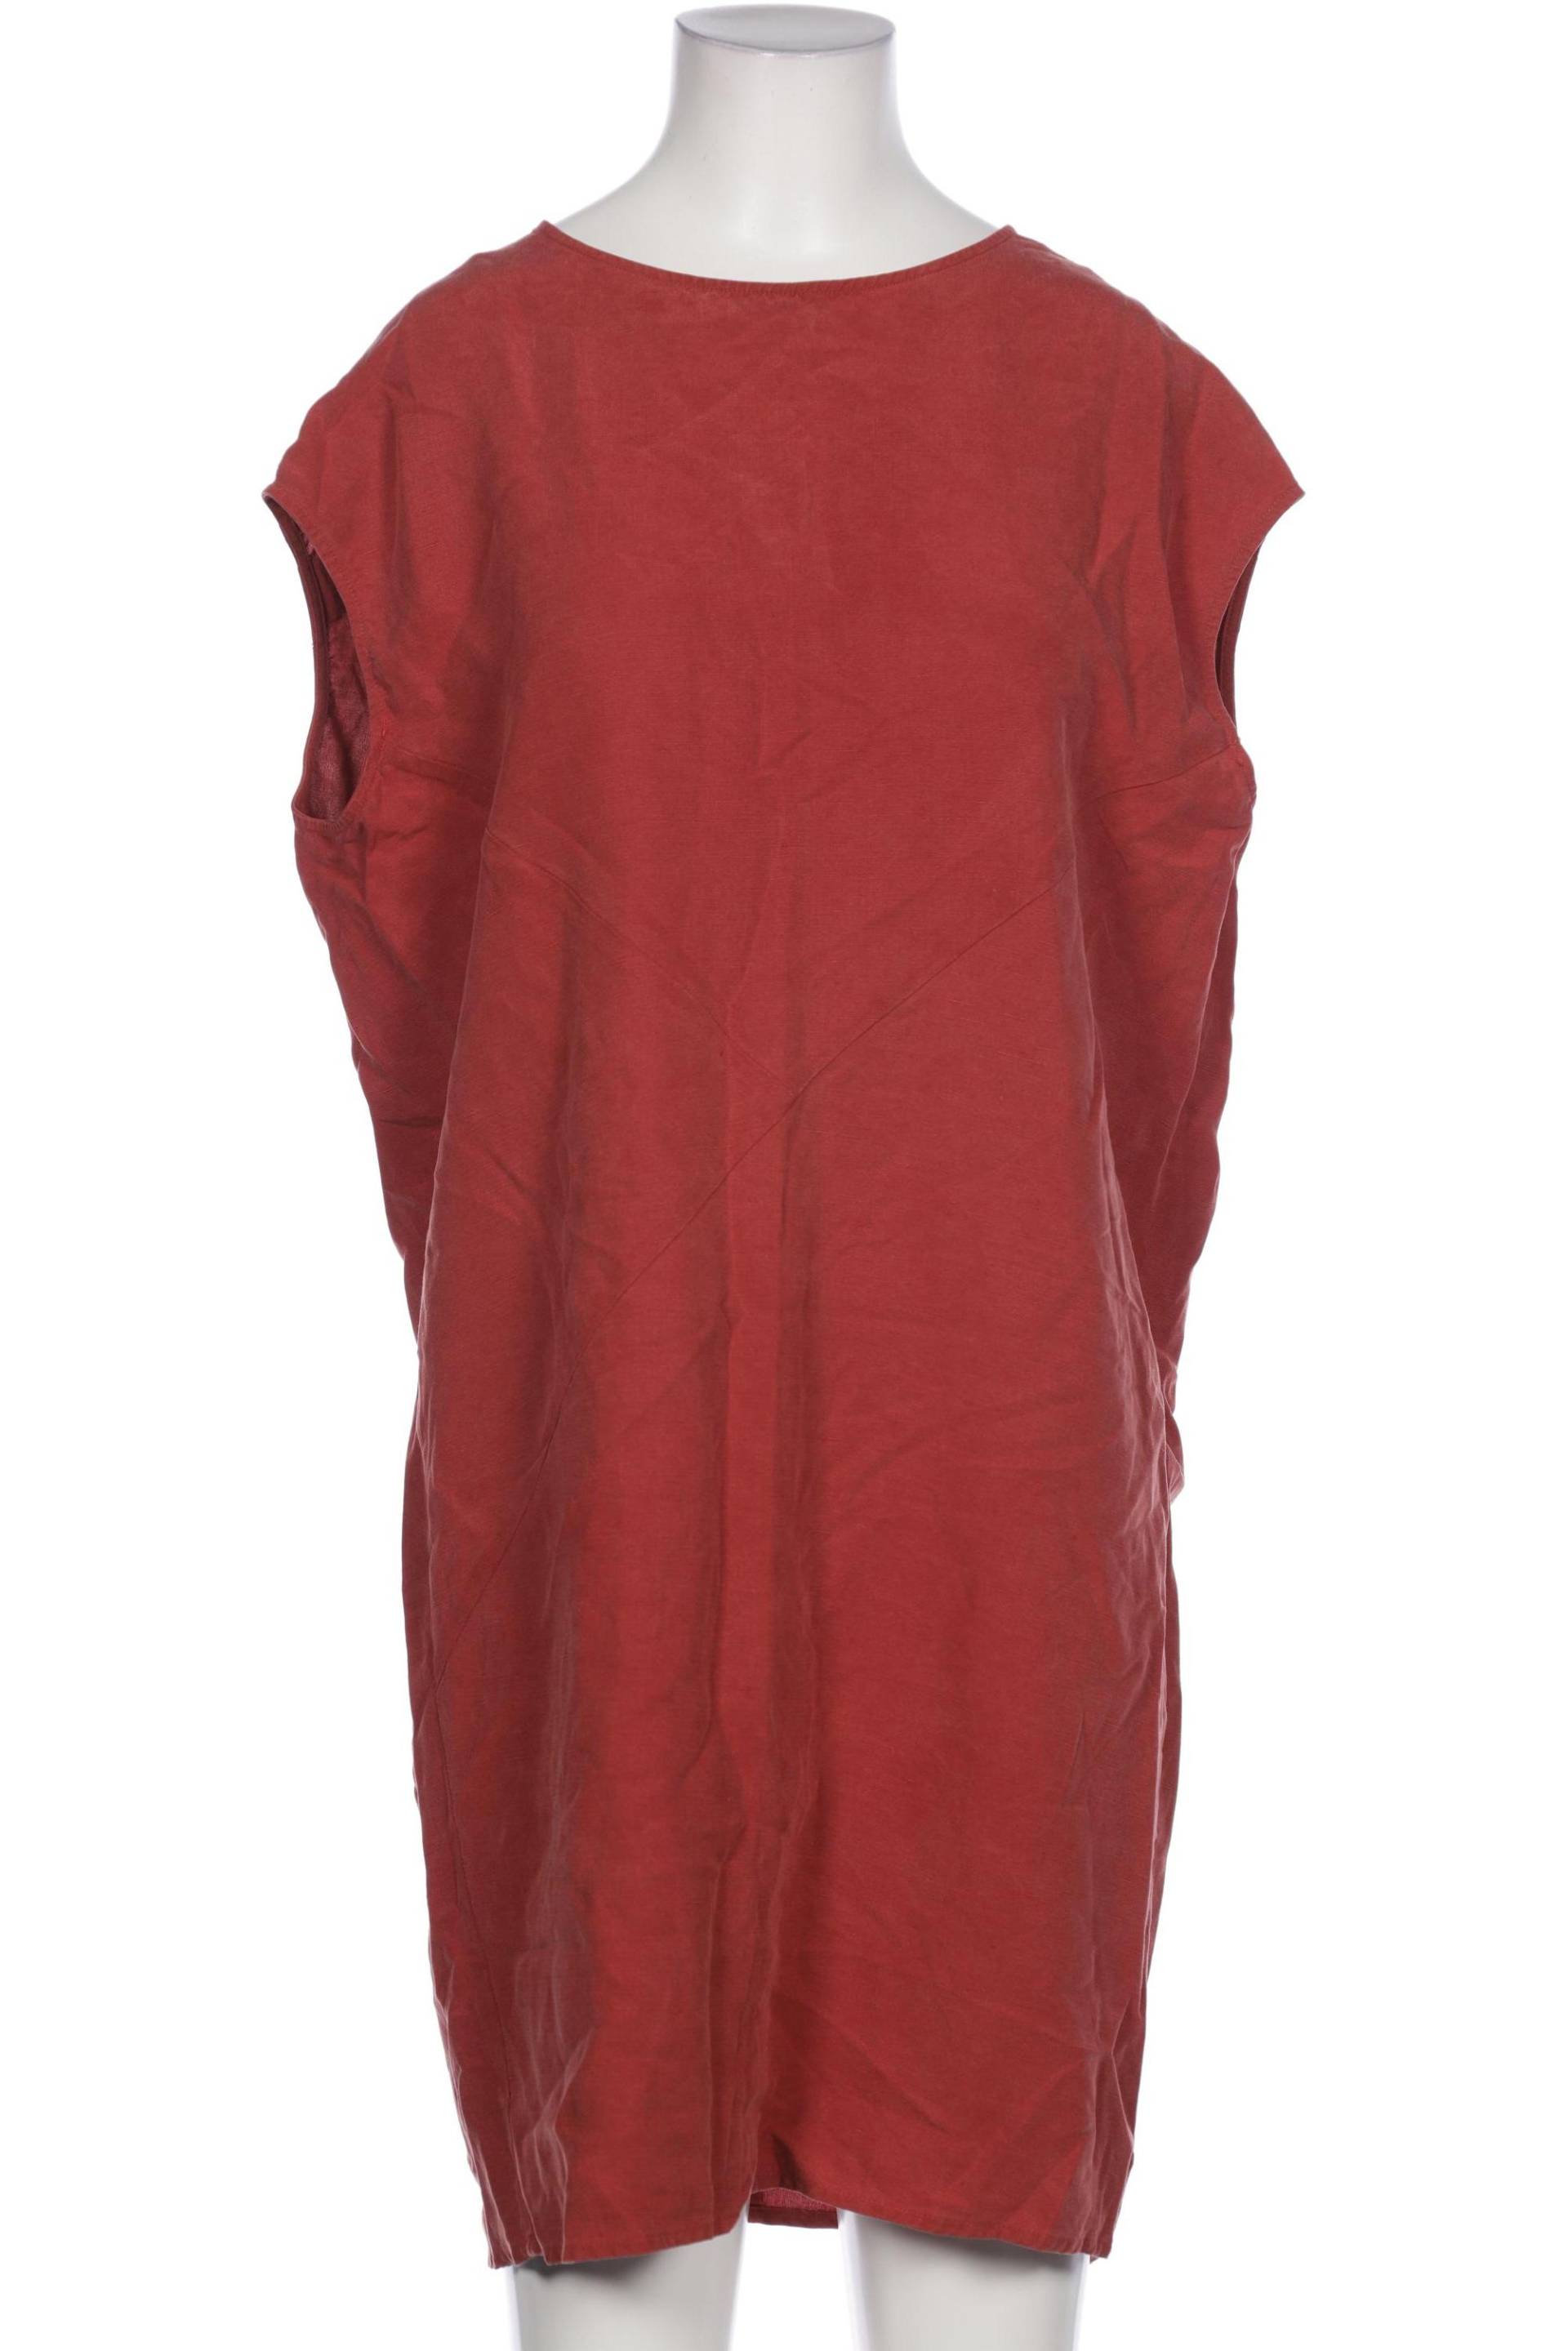 Stefanel Damen Kleid, rot, Gr. 36 von Stefanel